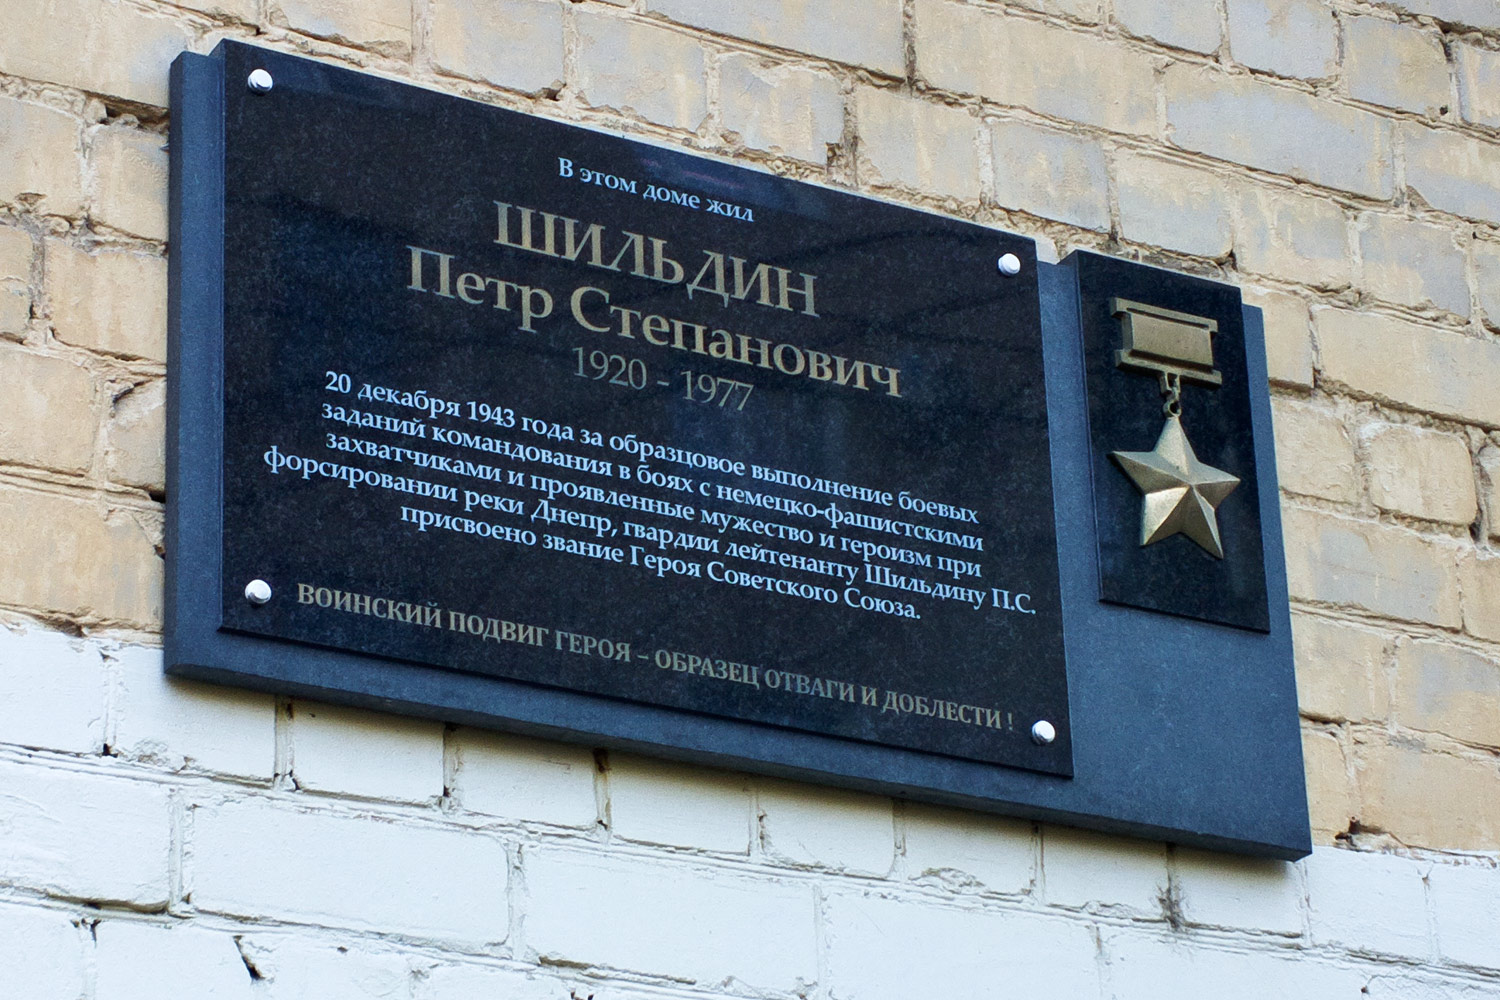 Samara, Улица Циолковского, 3 / Невская улица, 4. Semyonov — Memorial boards